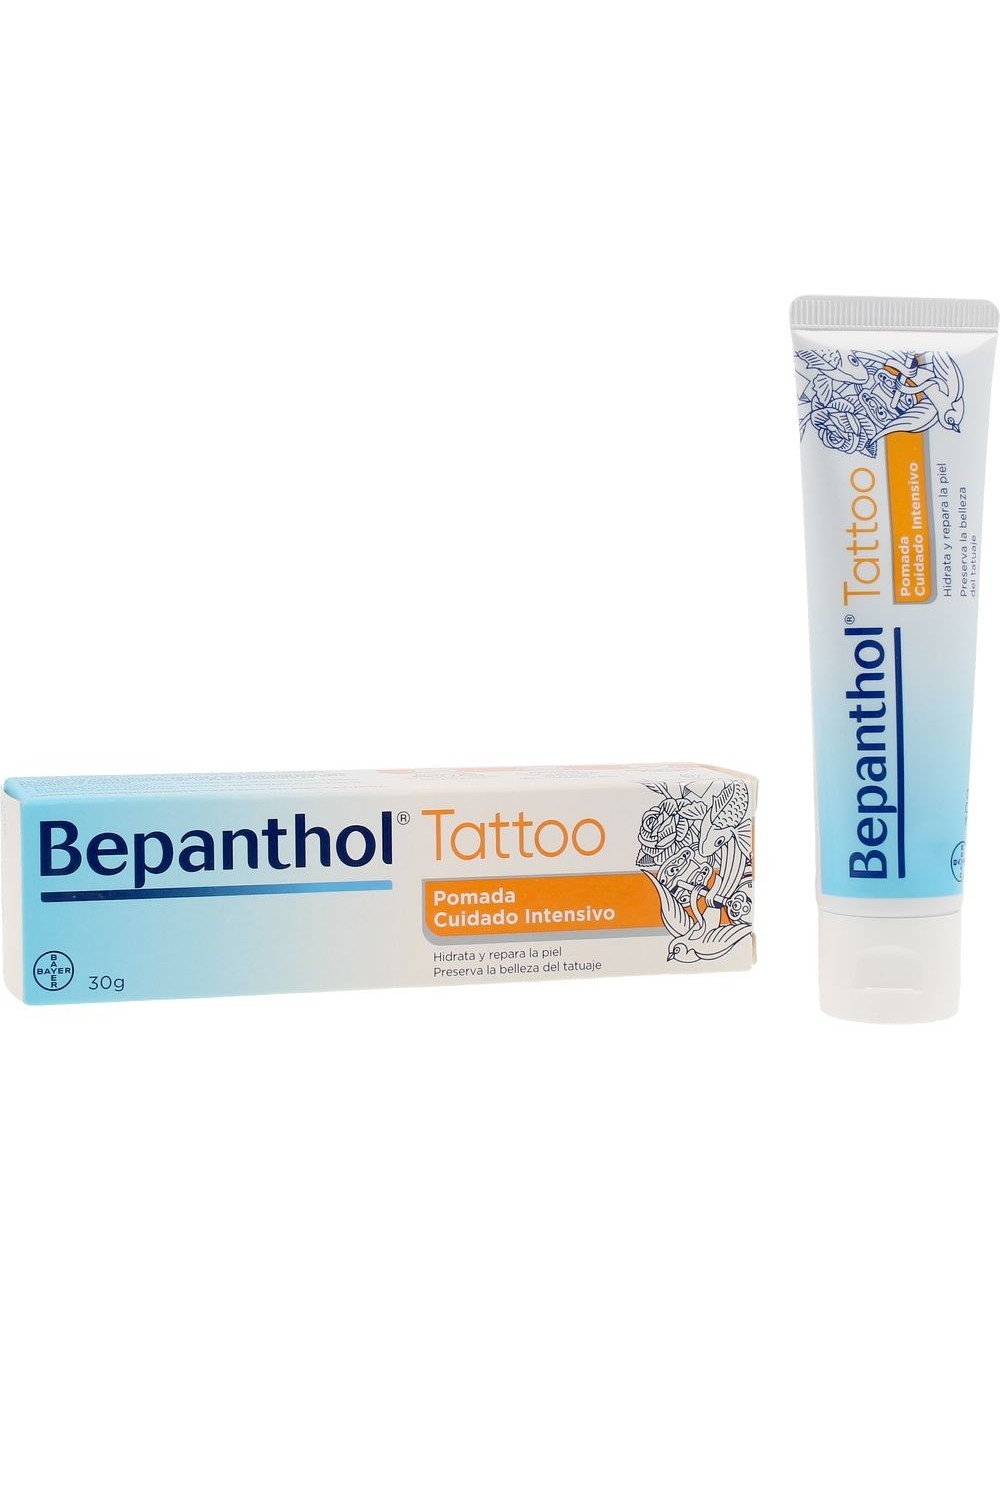 Bepanthol Tattoo Pomada Intensive Care 30g